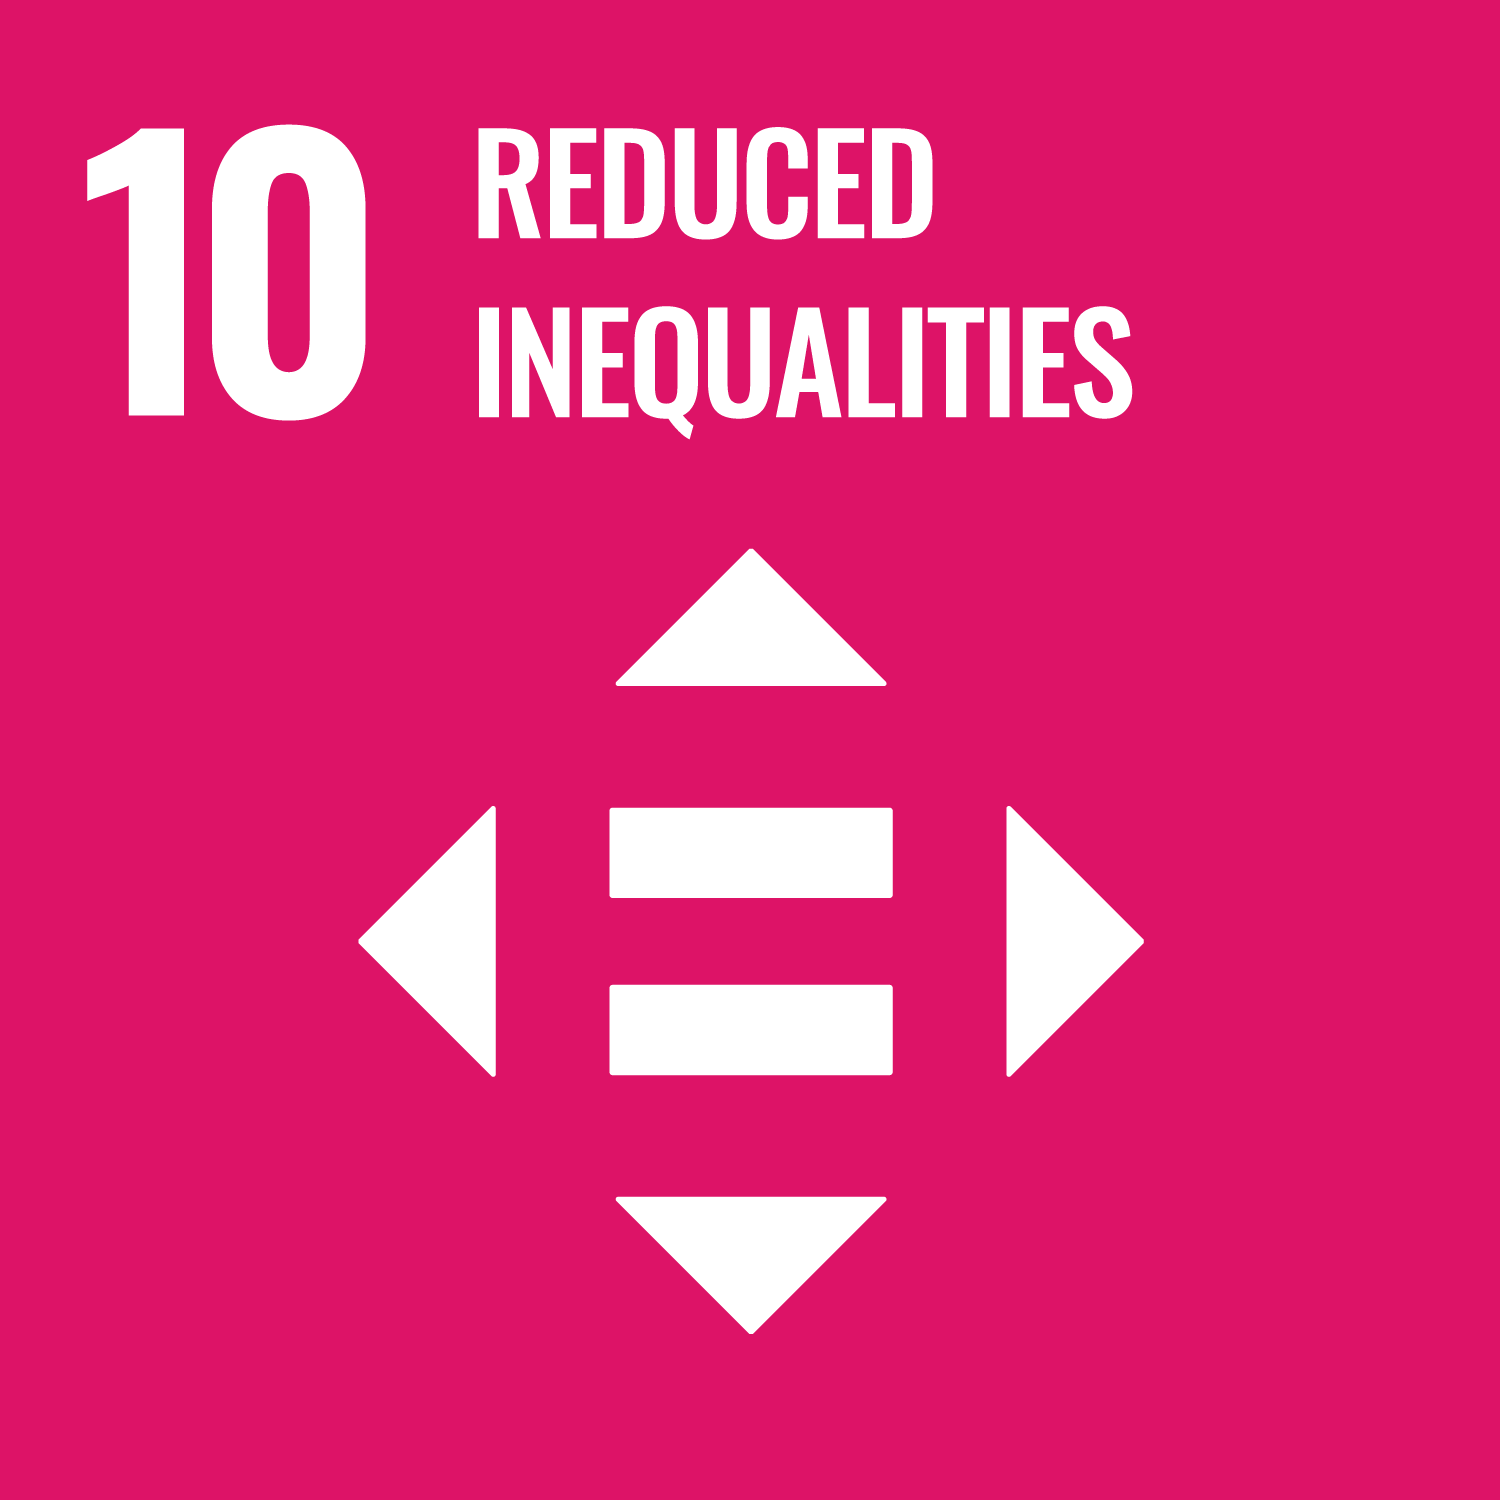 10: Reduced inequalities.